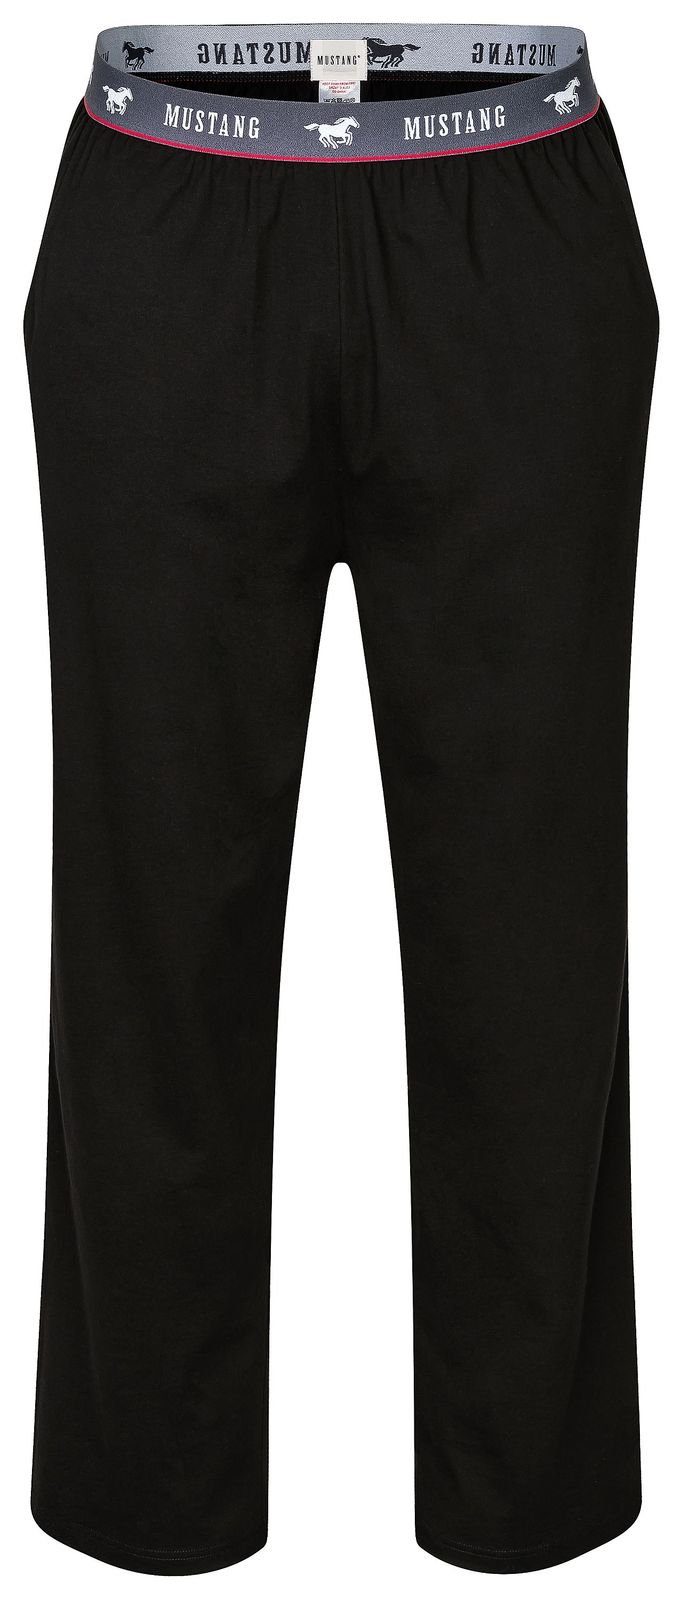 MUSTANG Loungepants Long Pants Lounge Hose Trousers Freizeithose roter Kontraststreifen und Mustangbranding schwarz